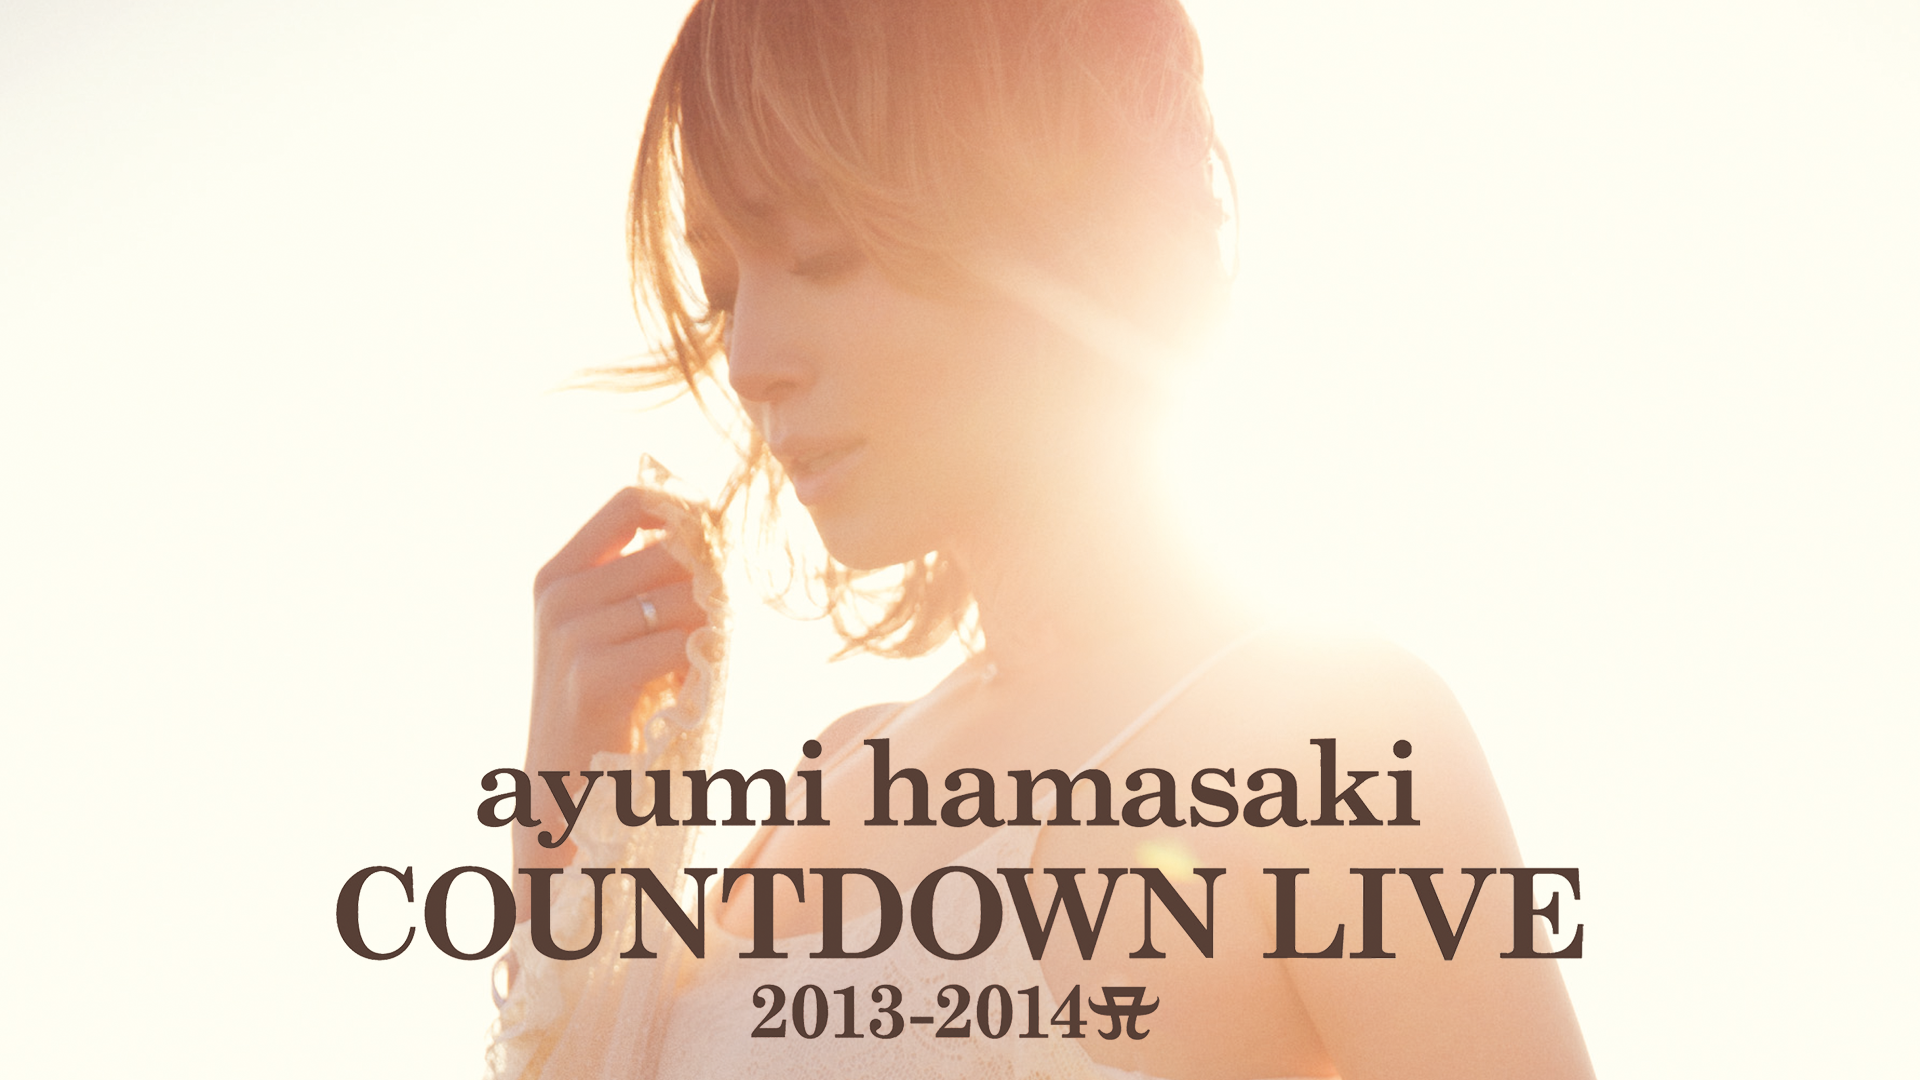 ayumi hamasaki COUNTDOWN LIVE 2013-2014 A(音楽・ライブ / 2014) - 動画配信 | U-NEXT  31日間無料トライアル